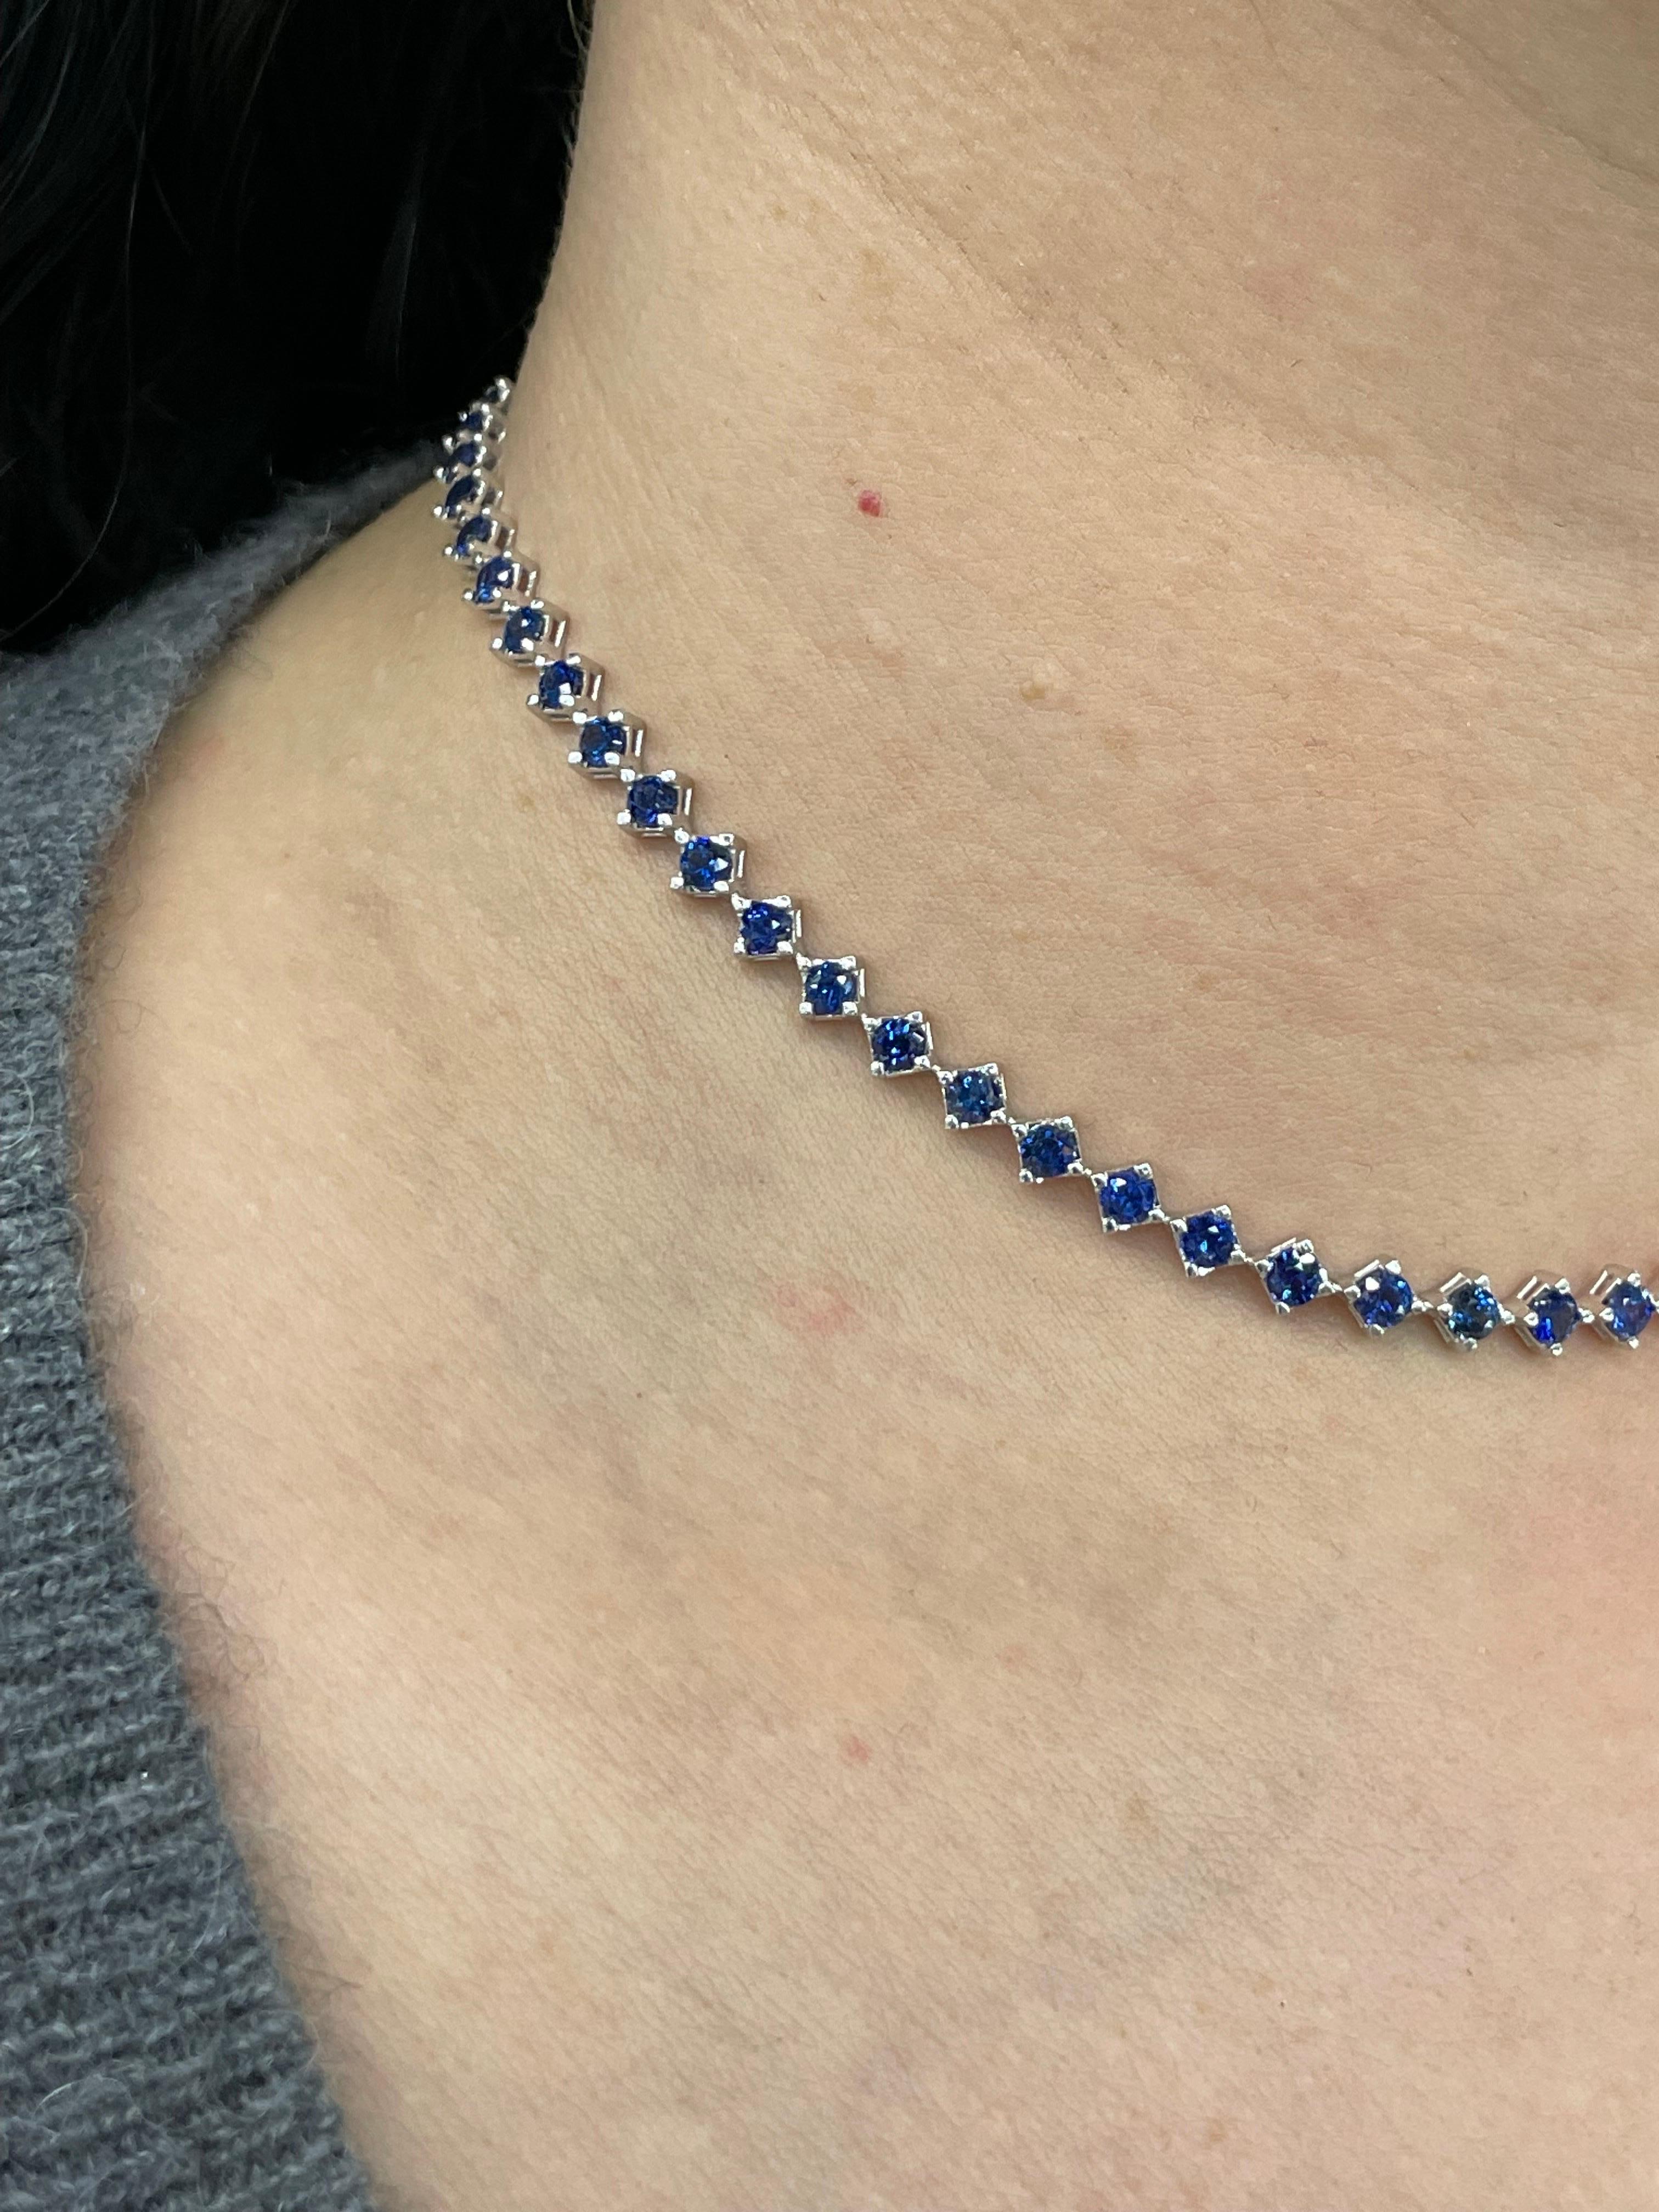 Blue Sapphire Choker Necklace & Bracelet 14 Karat White Gold 6.06 Carats 8